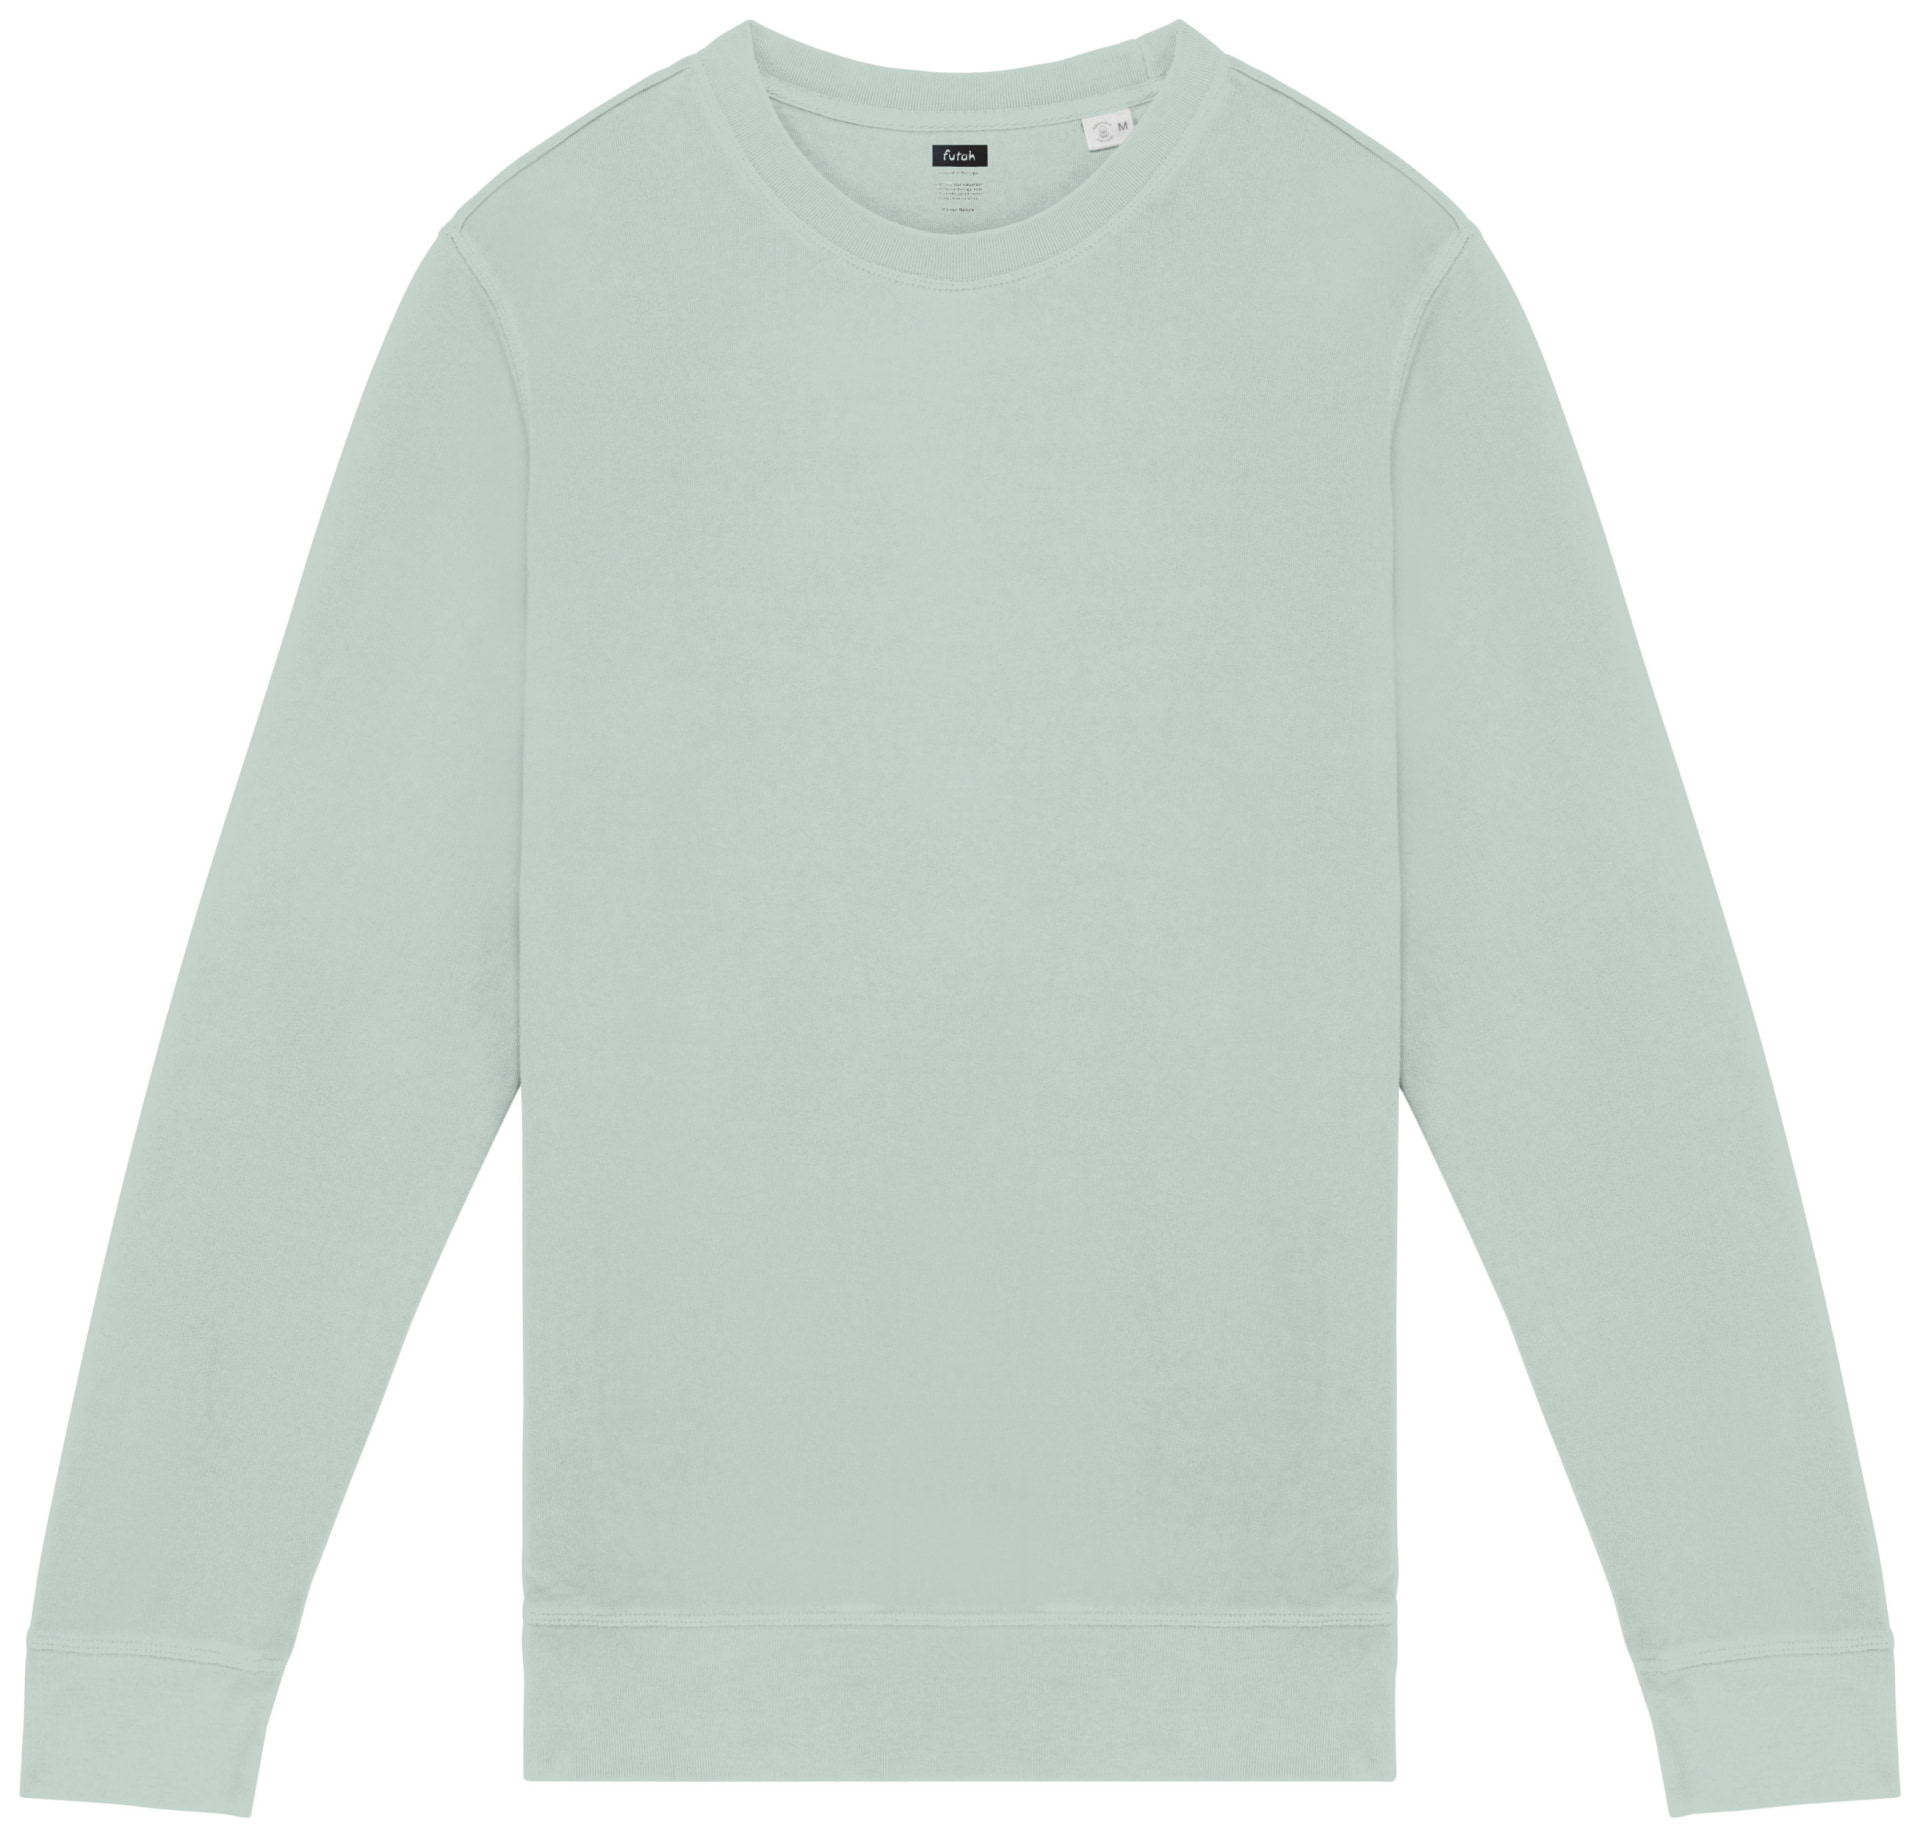 Futah - Organic Cotton Sweatshirt - Jade (1)